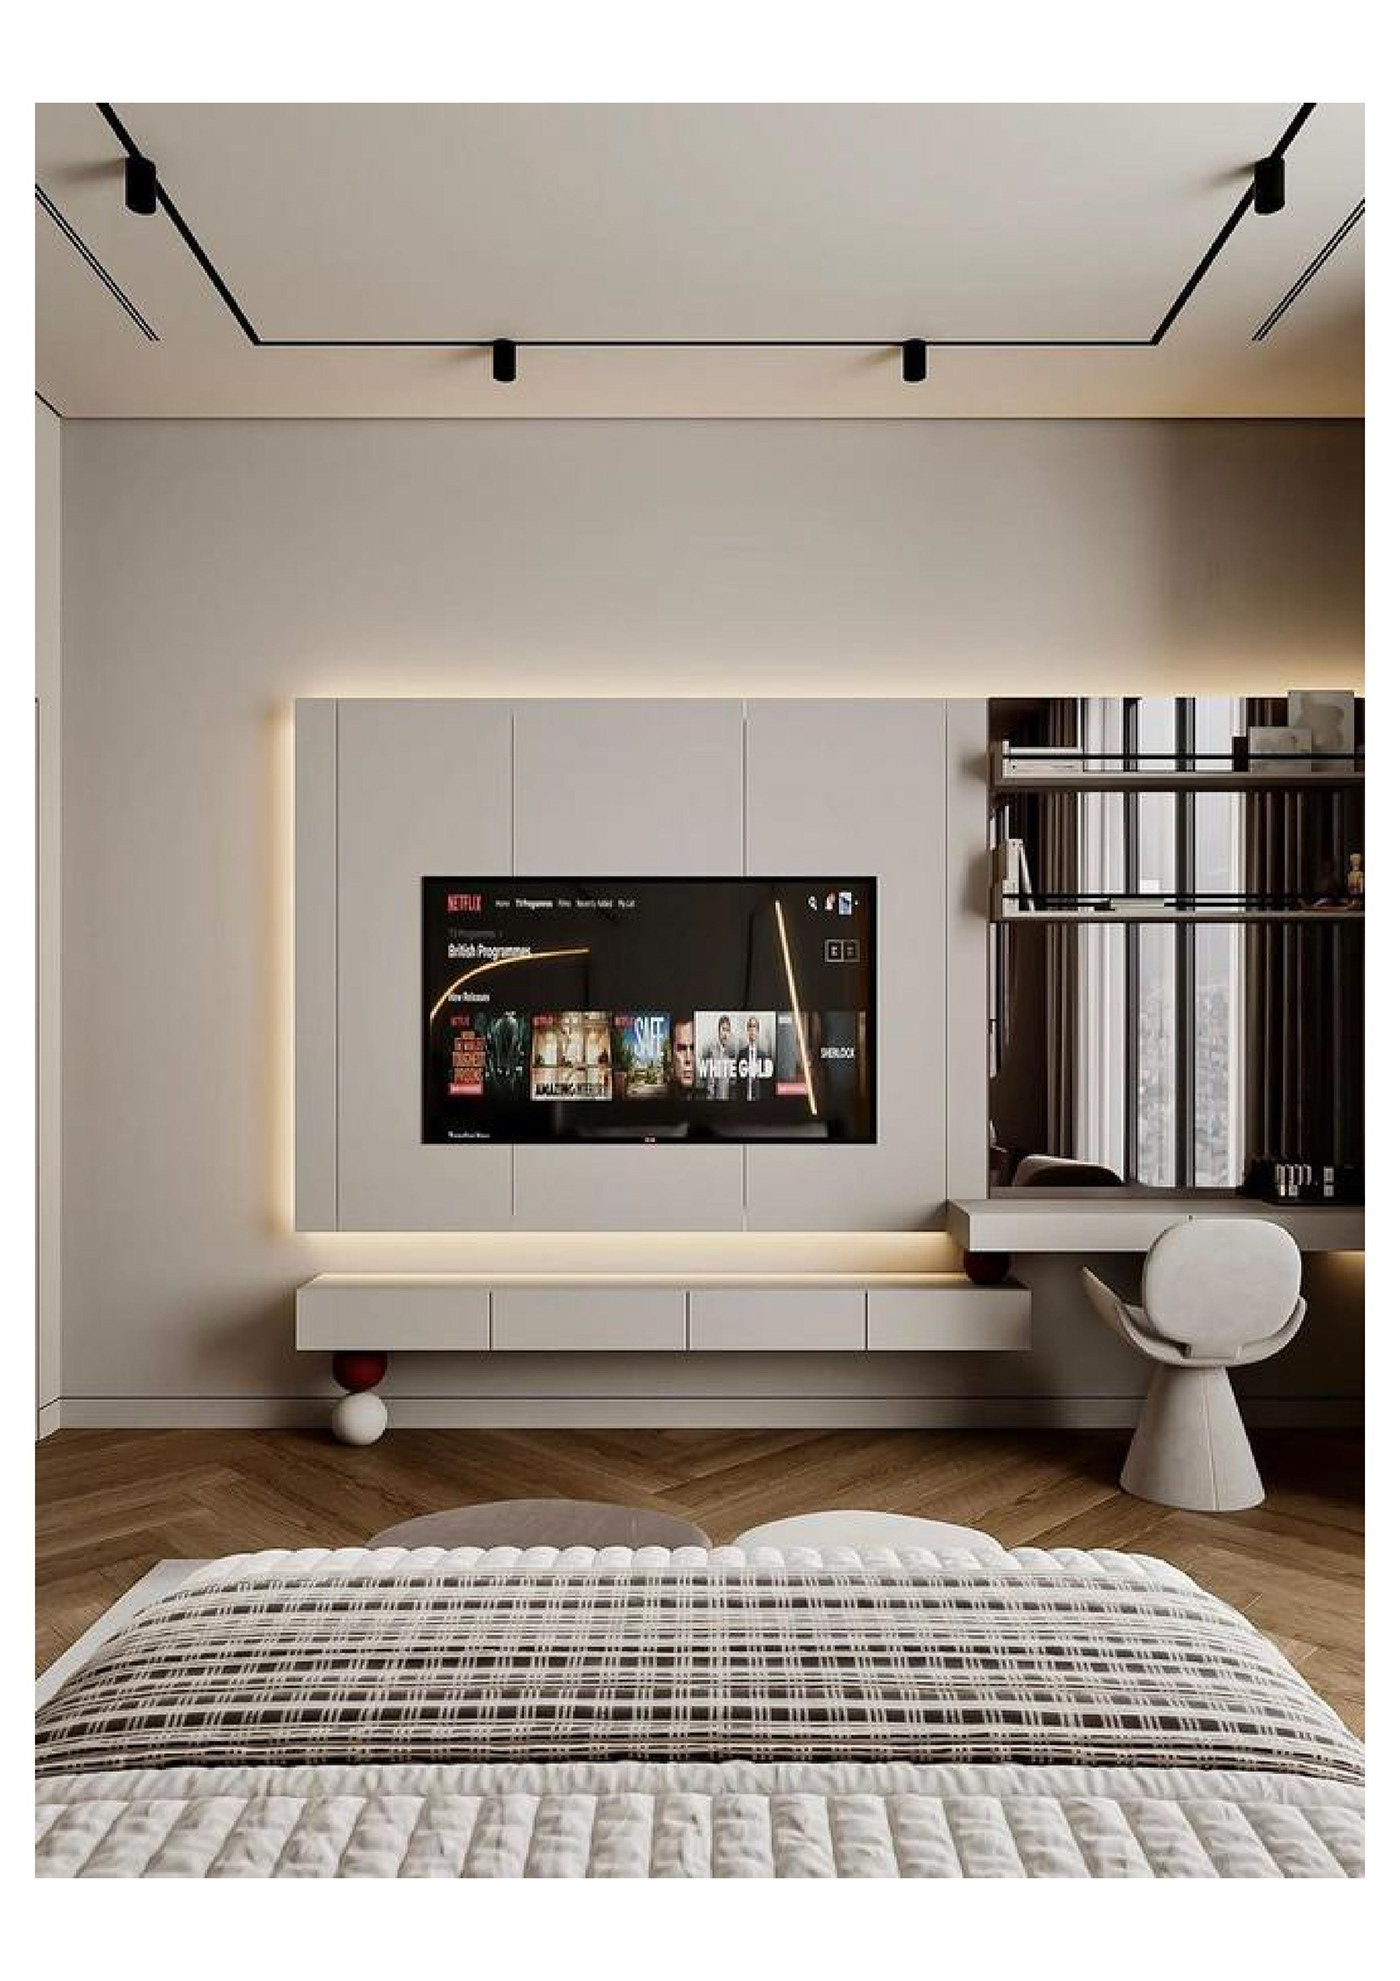 interior design  architecture bedroom design bedroominterior Bedroom interior design visualization Render 3ds max modern